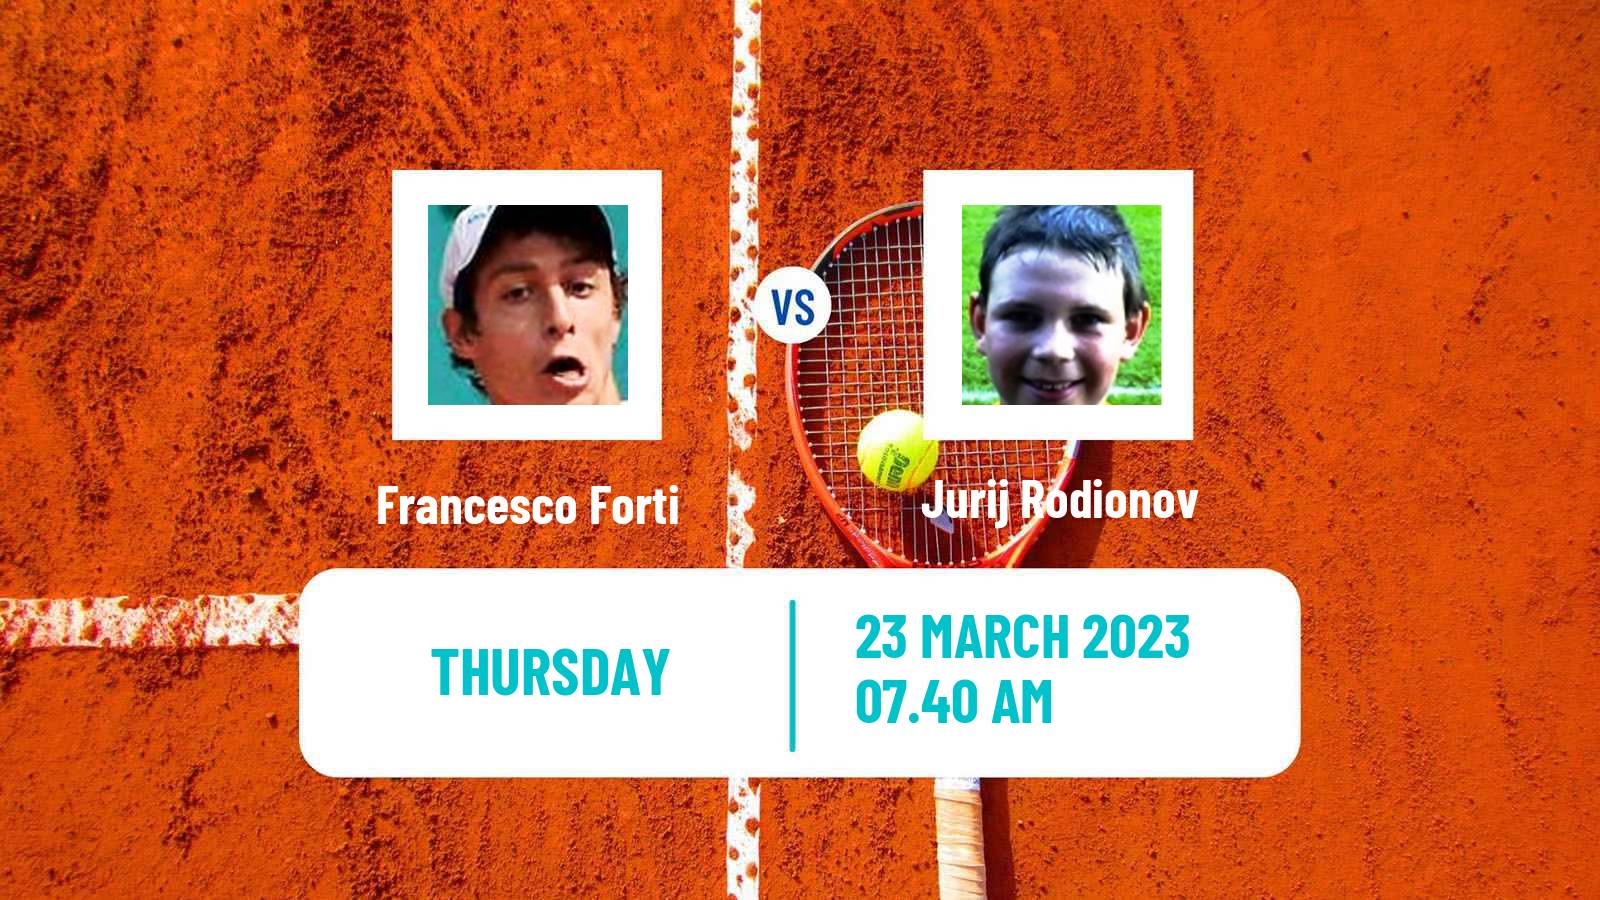 Tennis ATP Challenger Francesco Forti - Jurij Rodionov